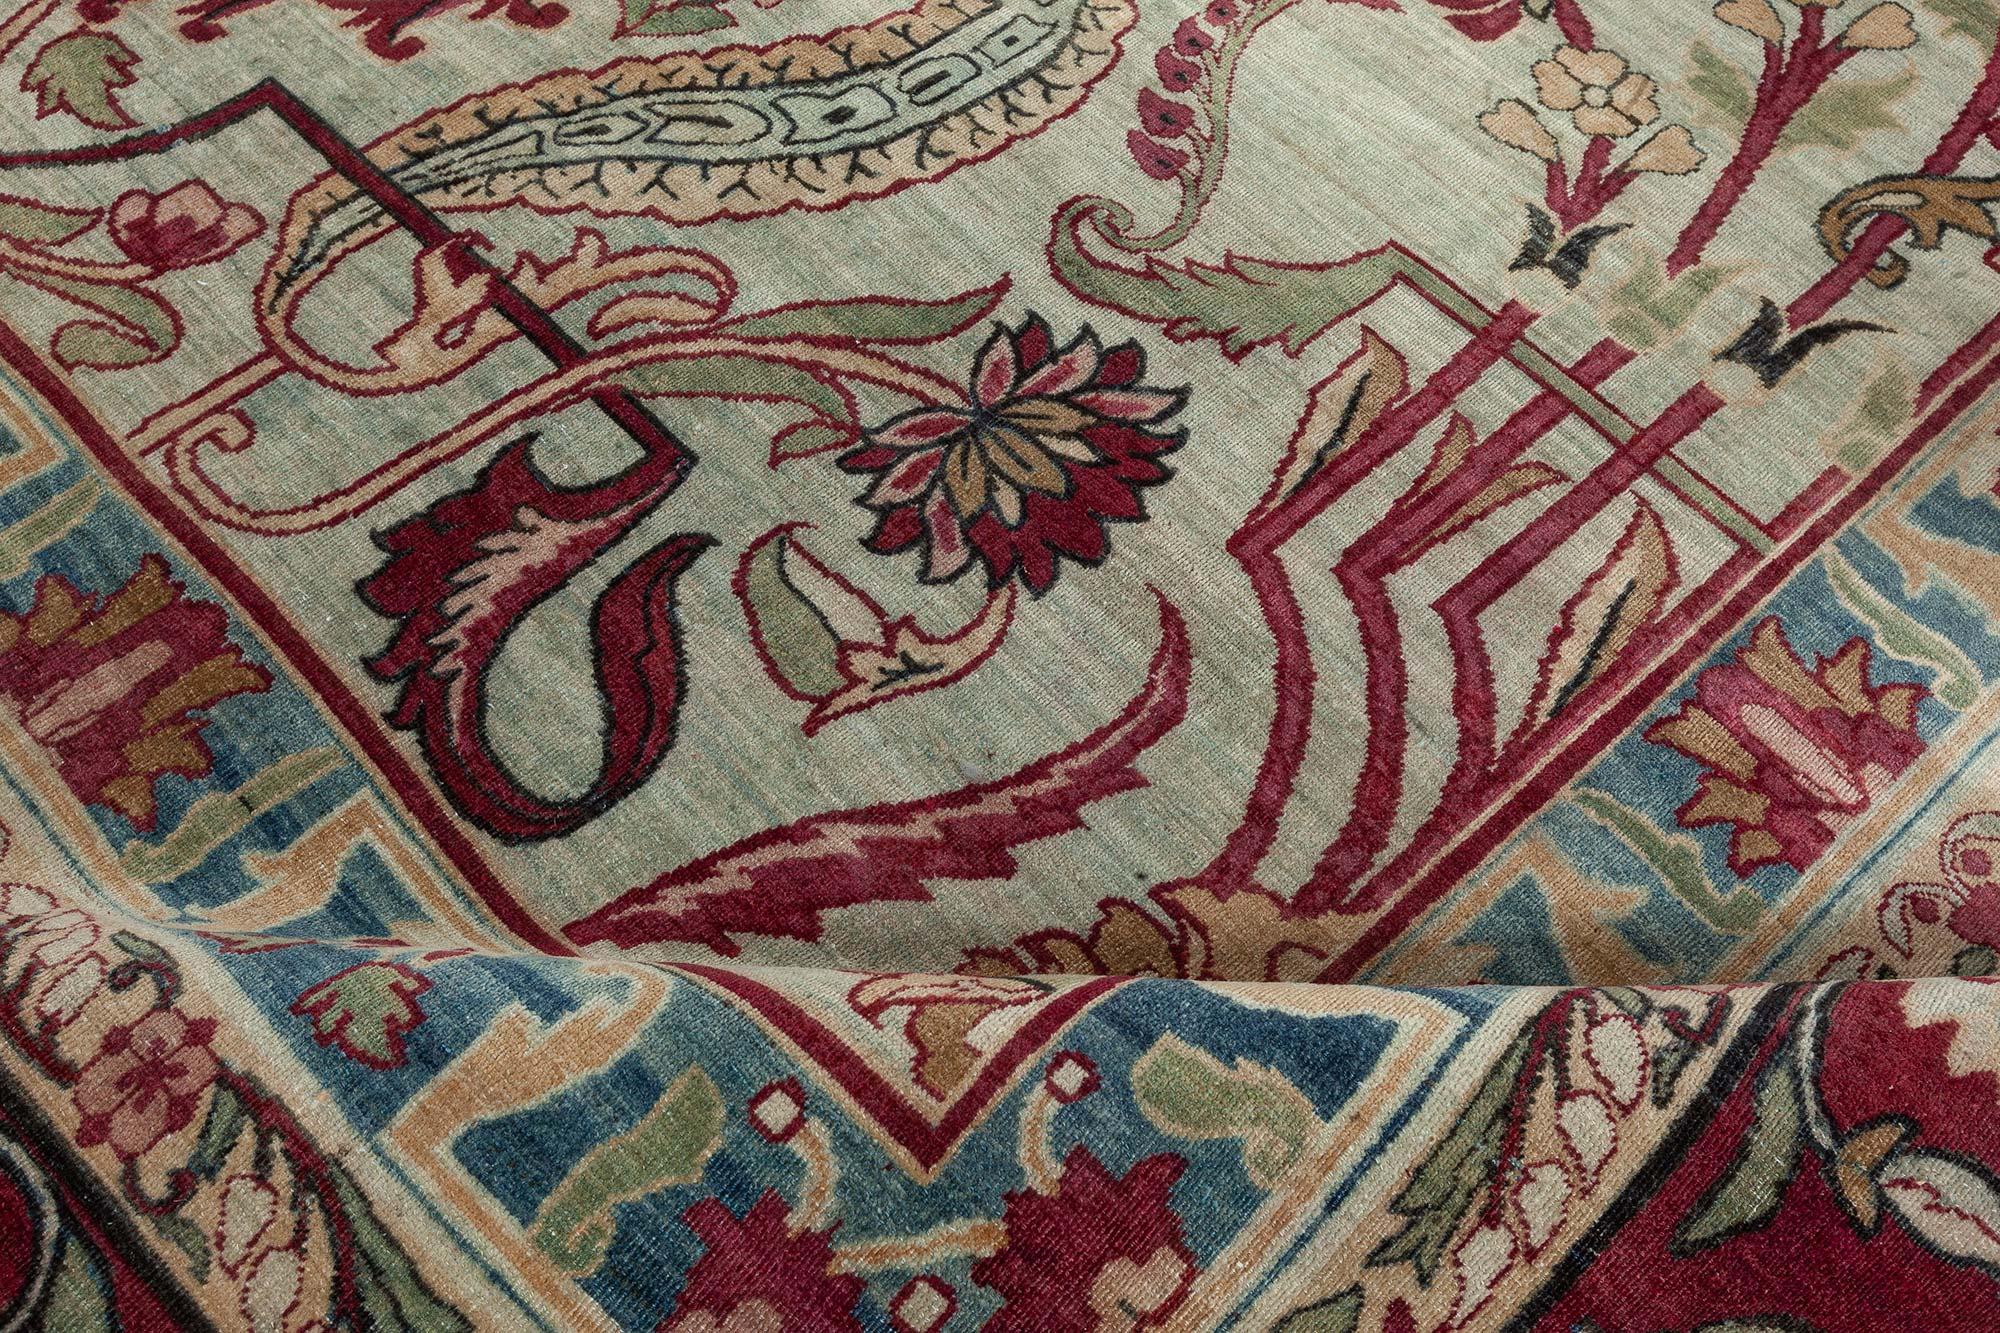 Persian Kirman oriental handmade wool rug
Size: 15'2